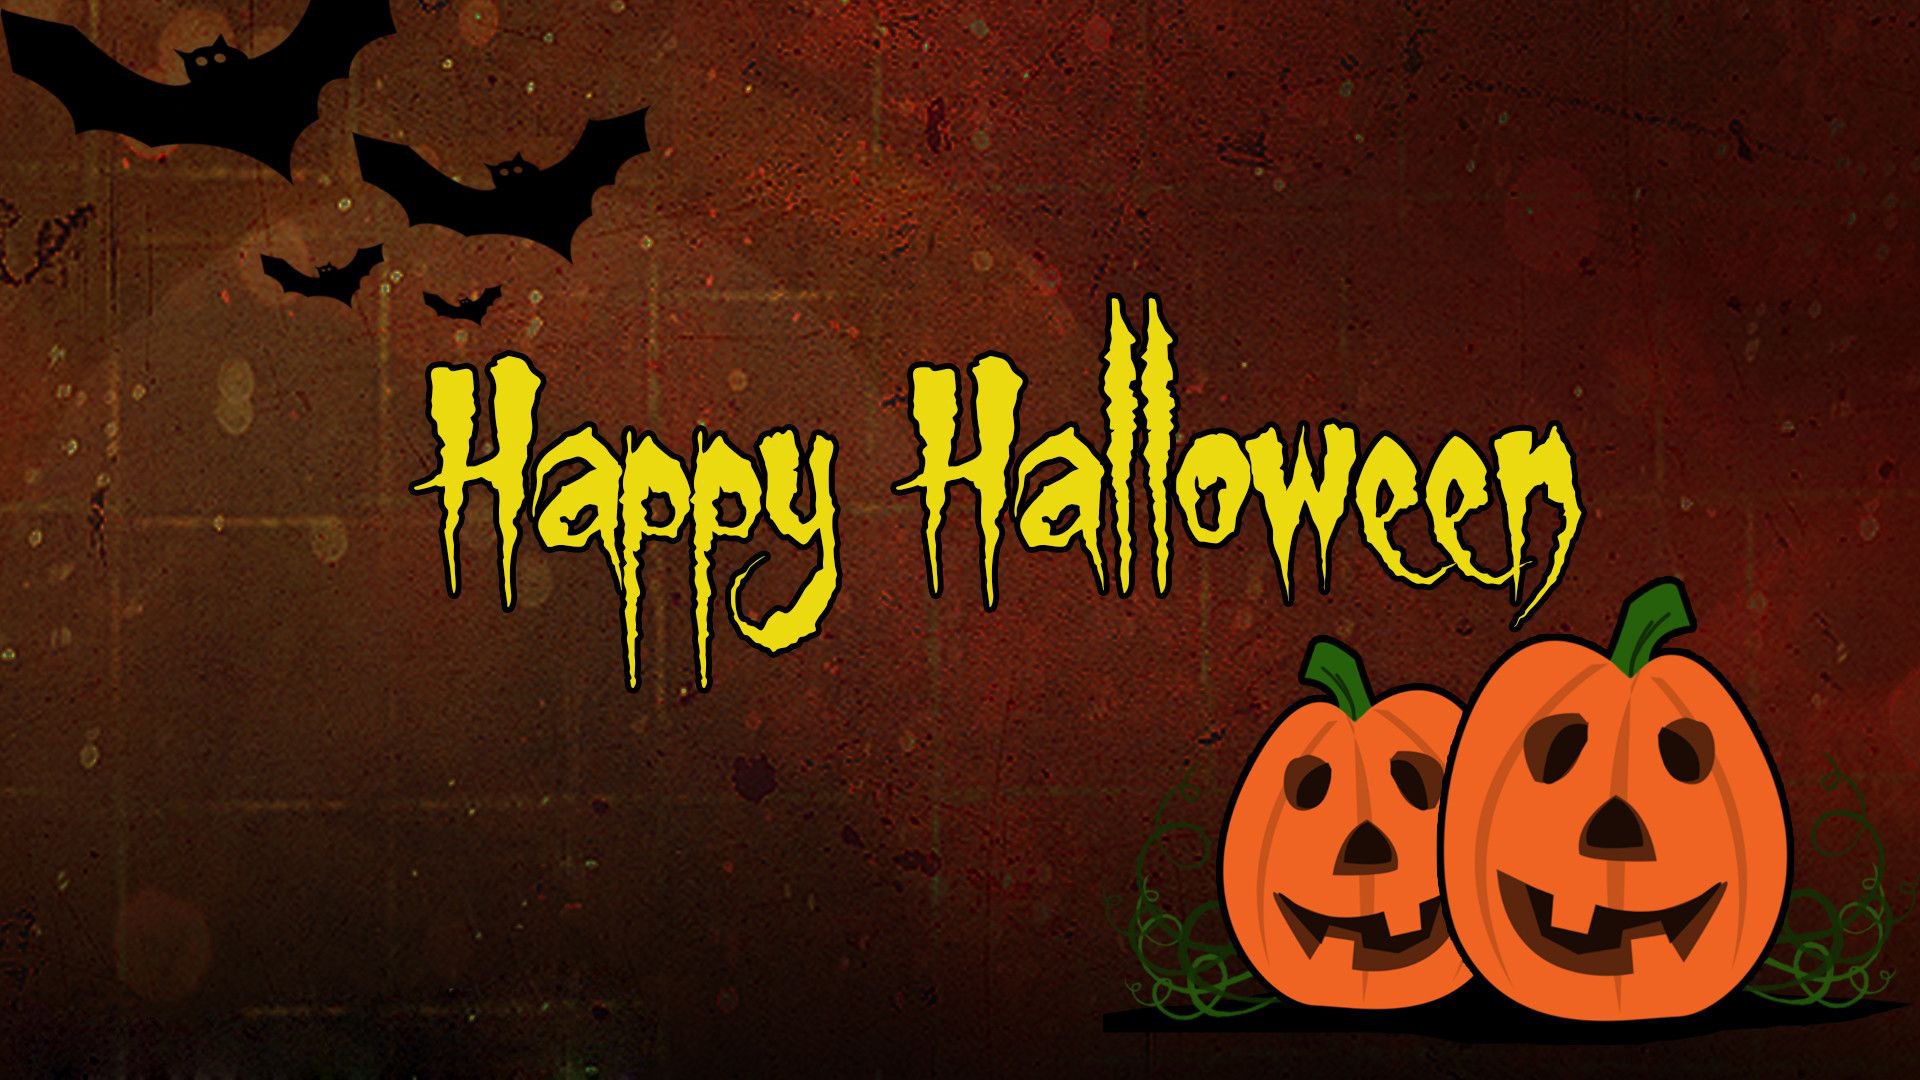 Aesthetic Halloween Wallpaper HD Free download